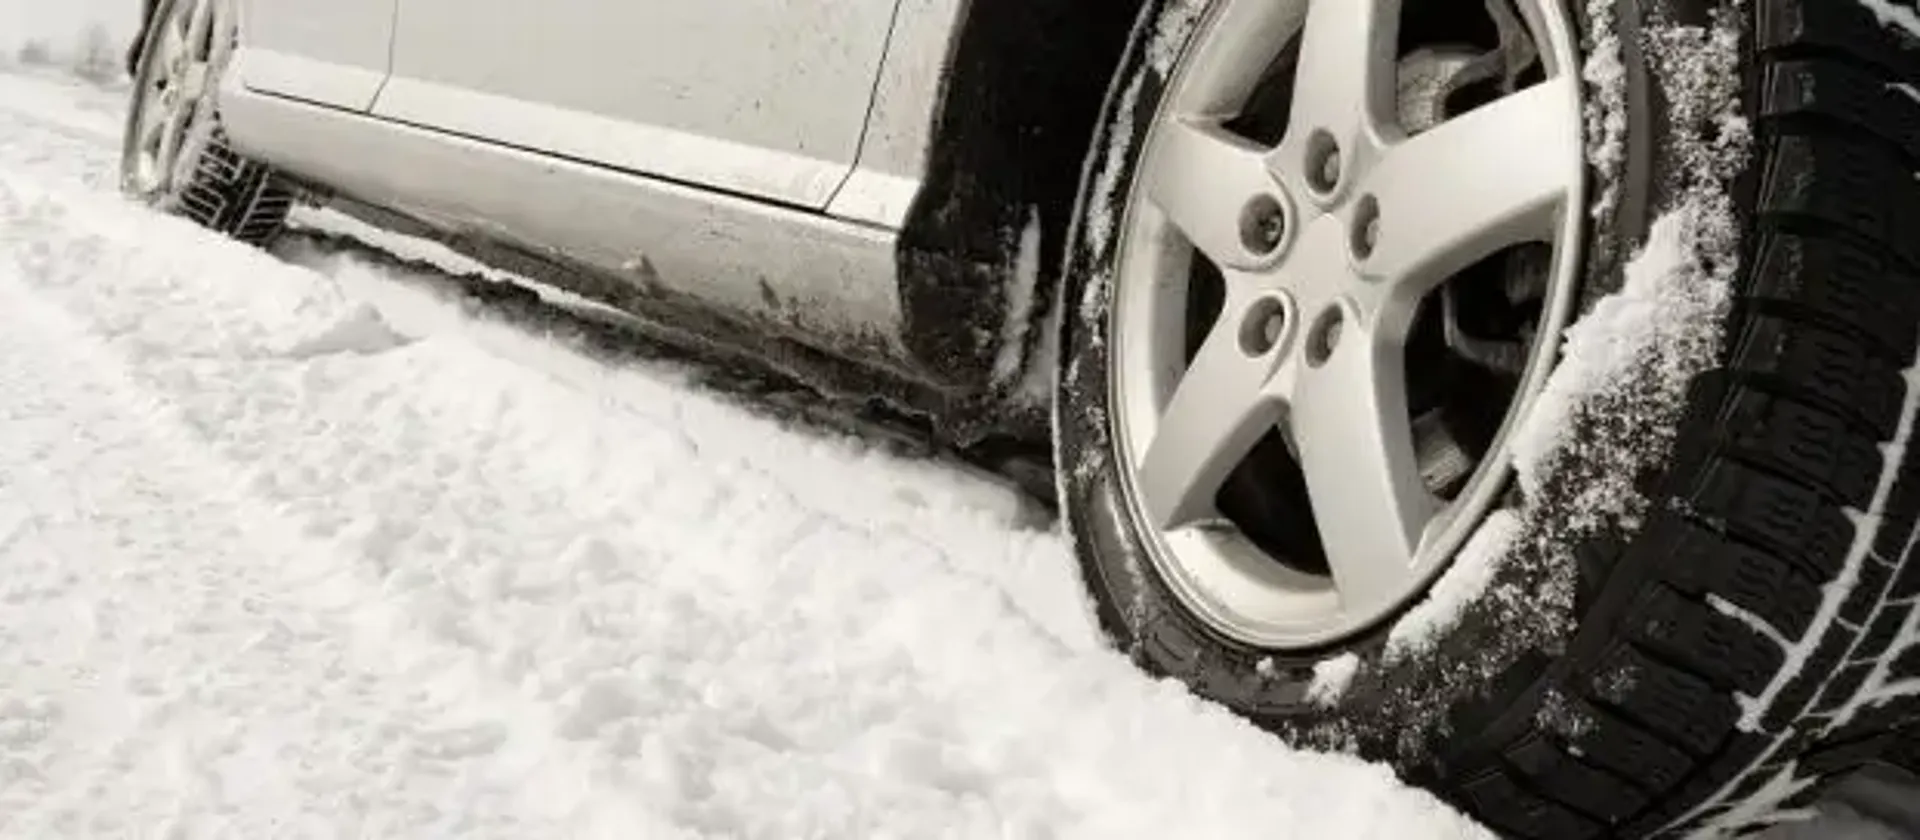 rear car wheel in the snow.